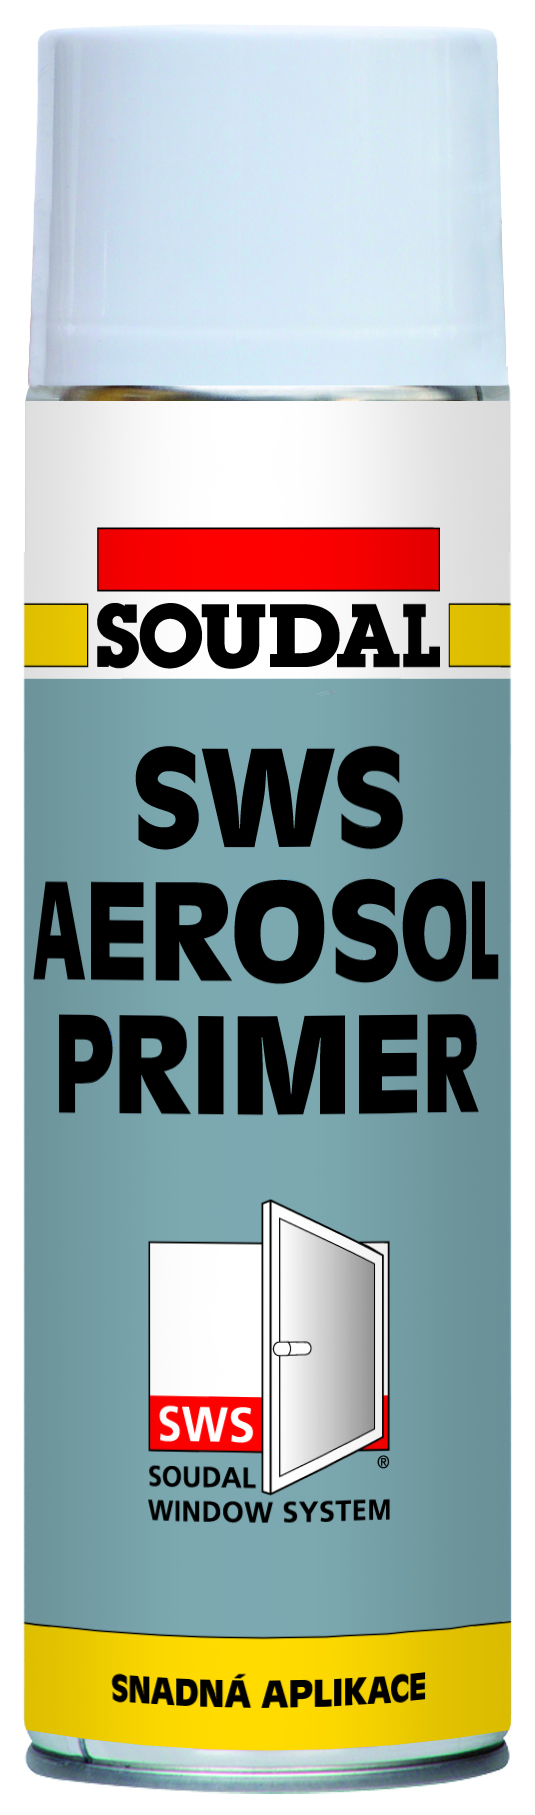 Soudal SWS Primer Aerosol 500ml